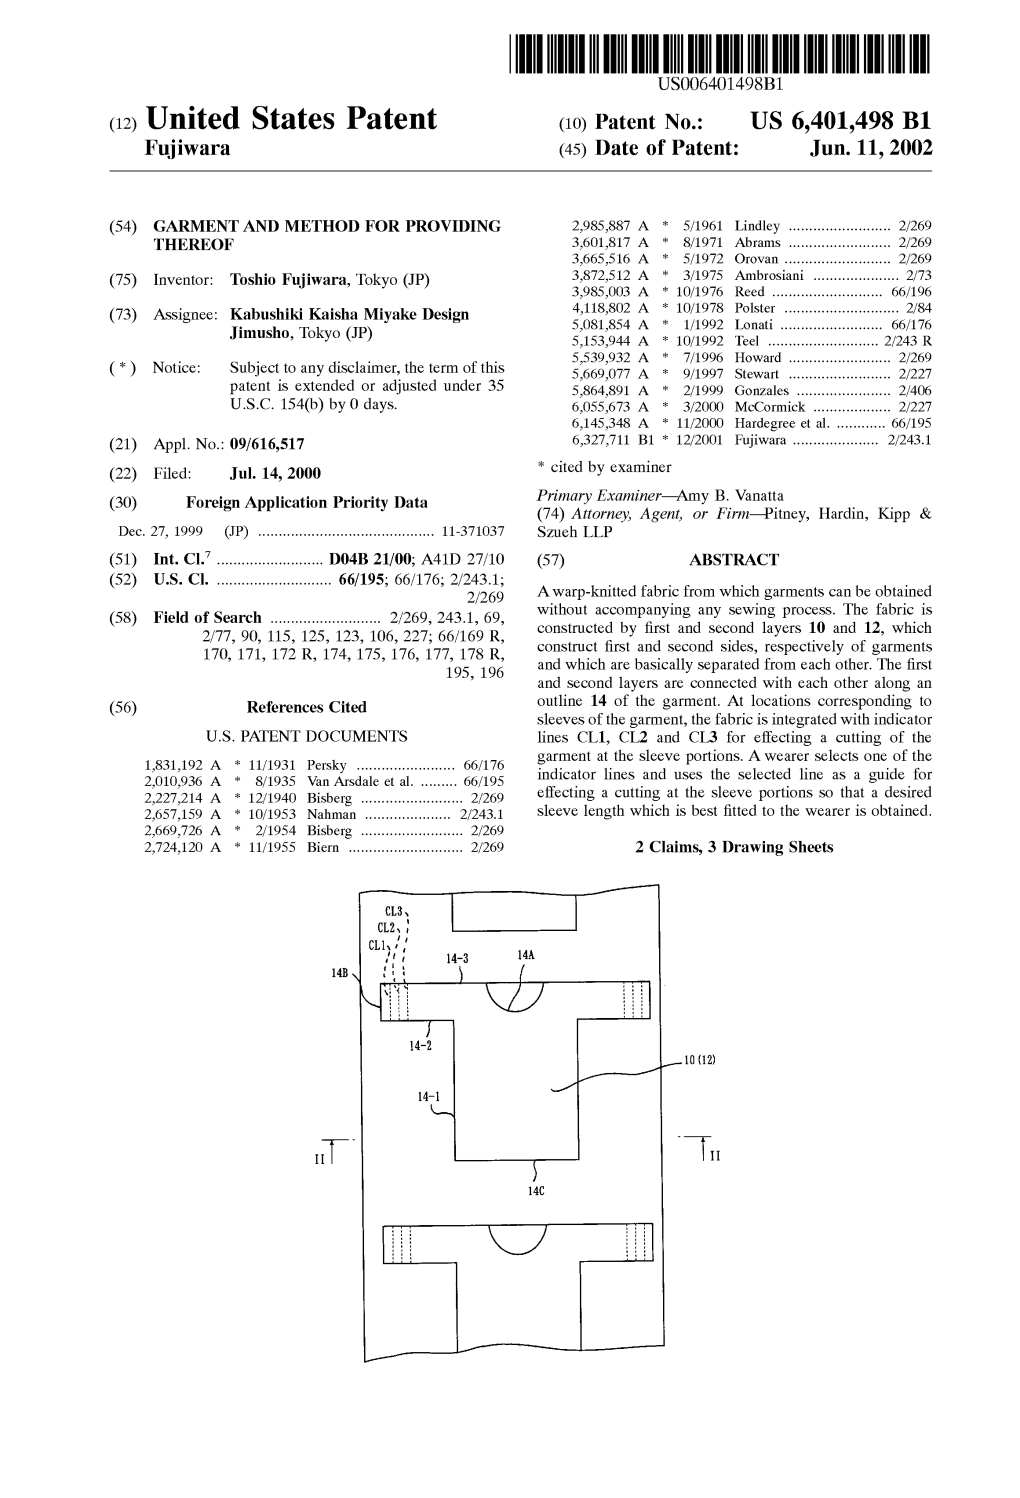 (12) United States Patent (10) Patent No.: US 6,401,498 B1 Fujiwara (45) Date of Patent: Jun